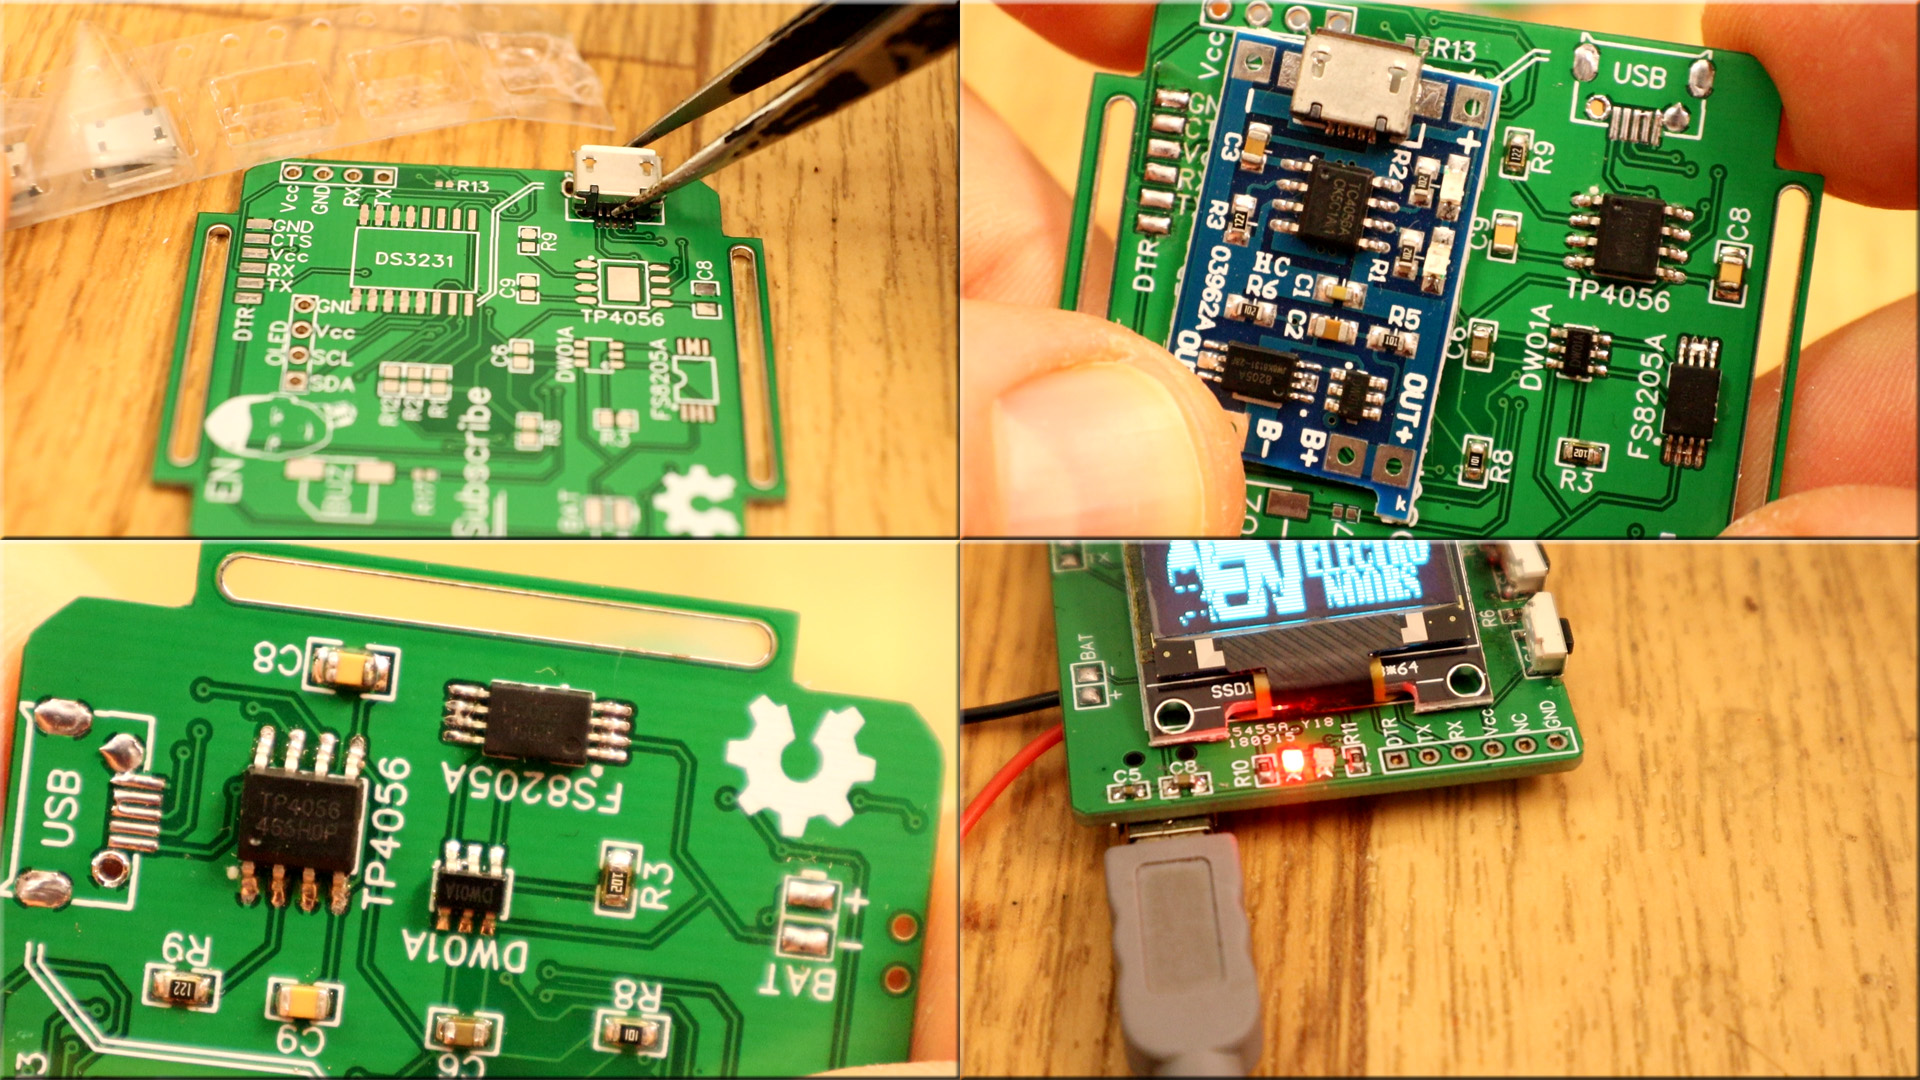 soldering arduino smartatech charging lipo circuit 3.7